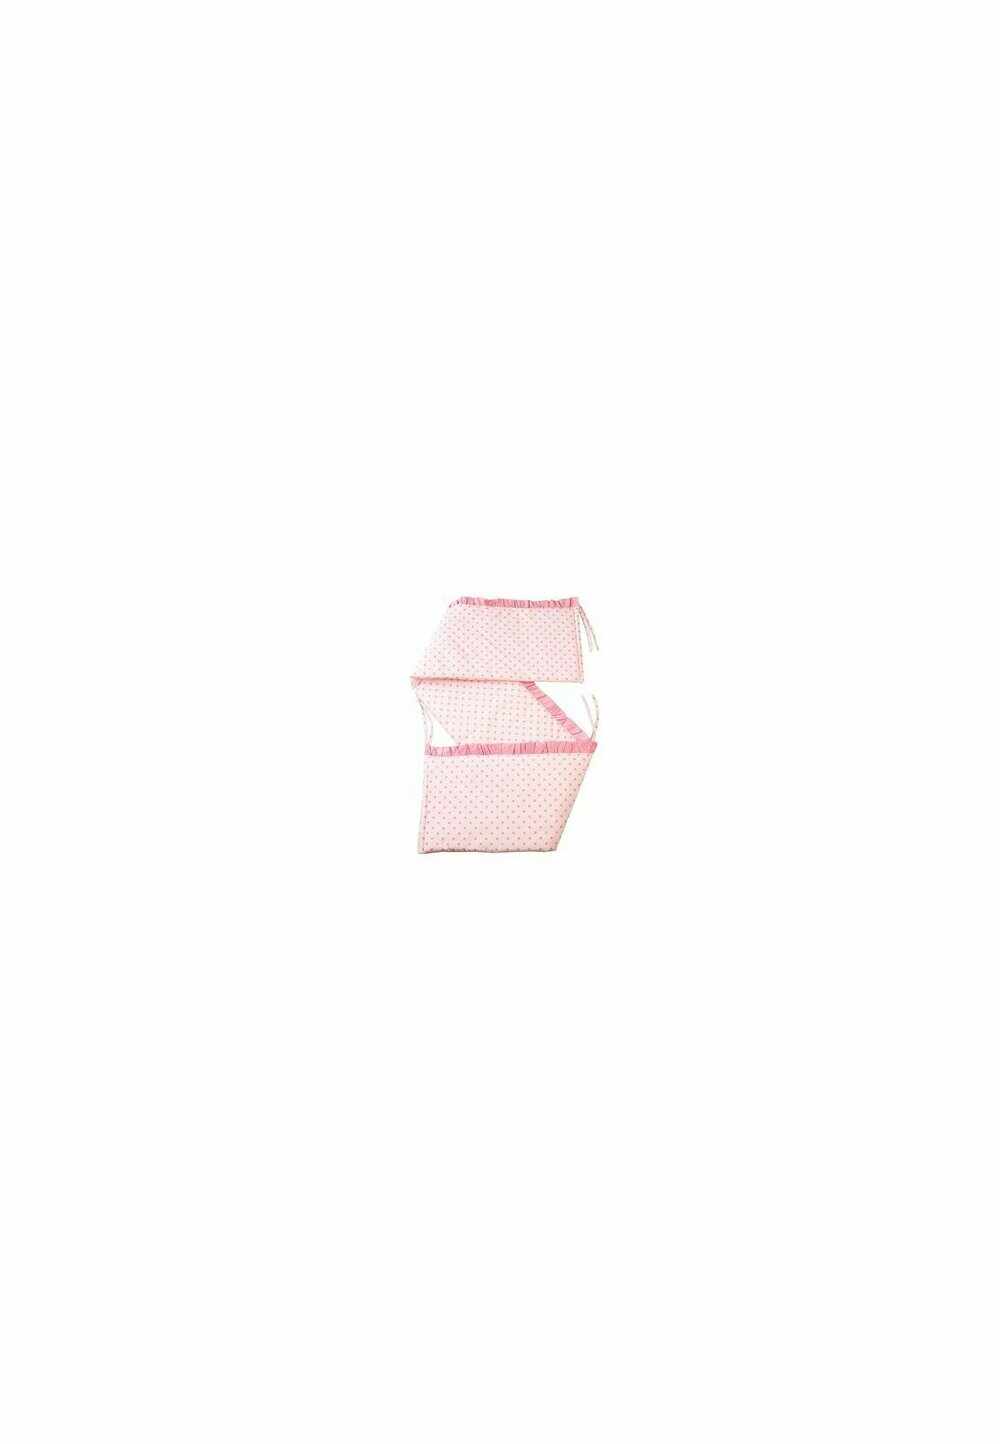 Aparatoare laterala, roz cu stelute, 180 x 30 cm